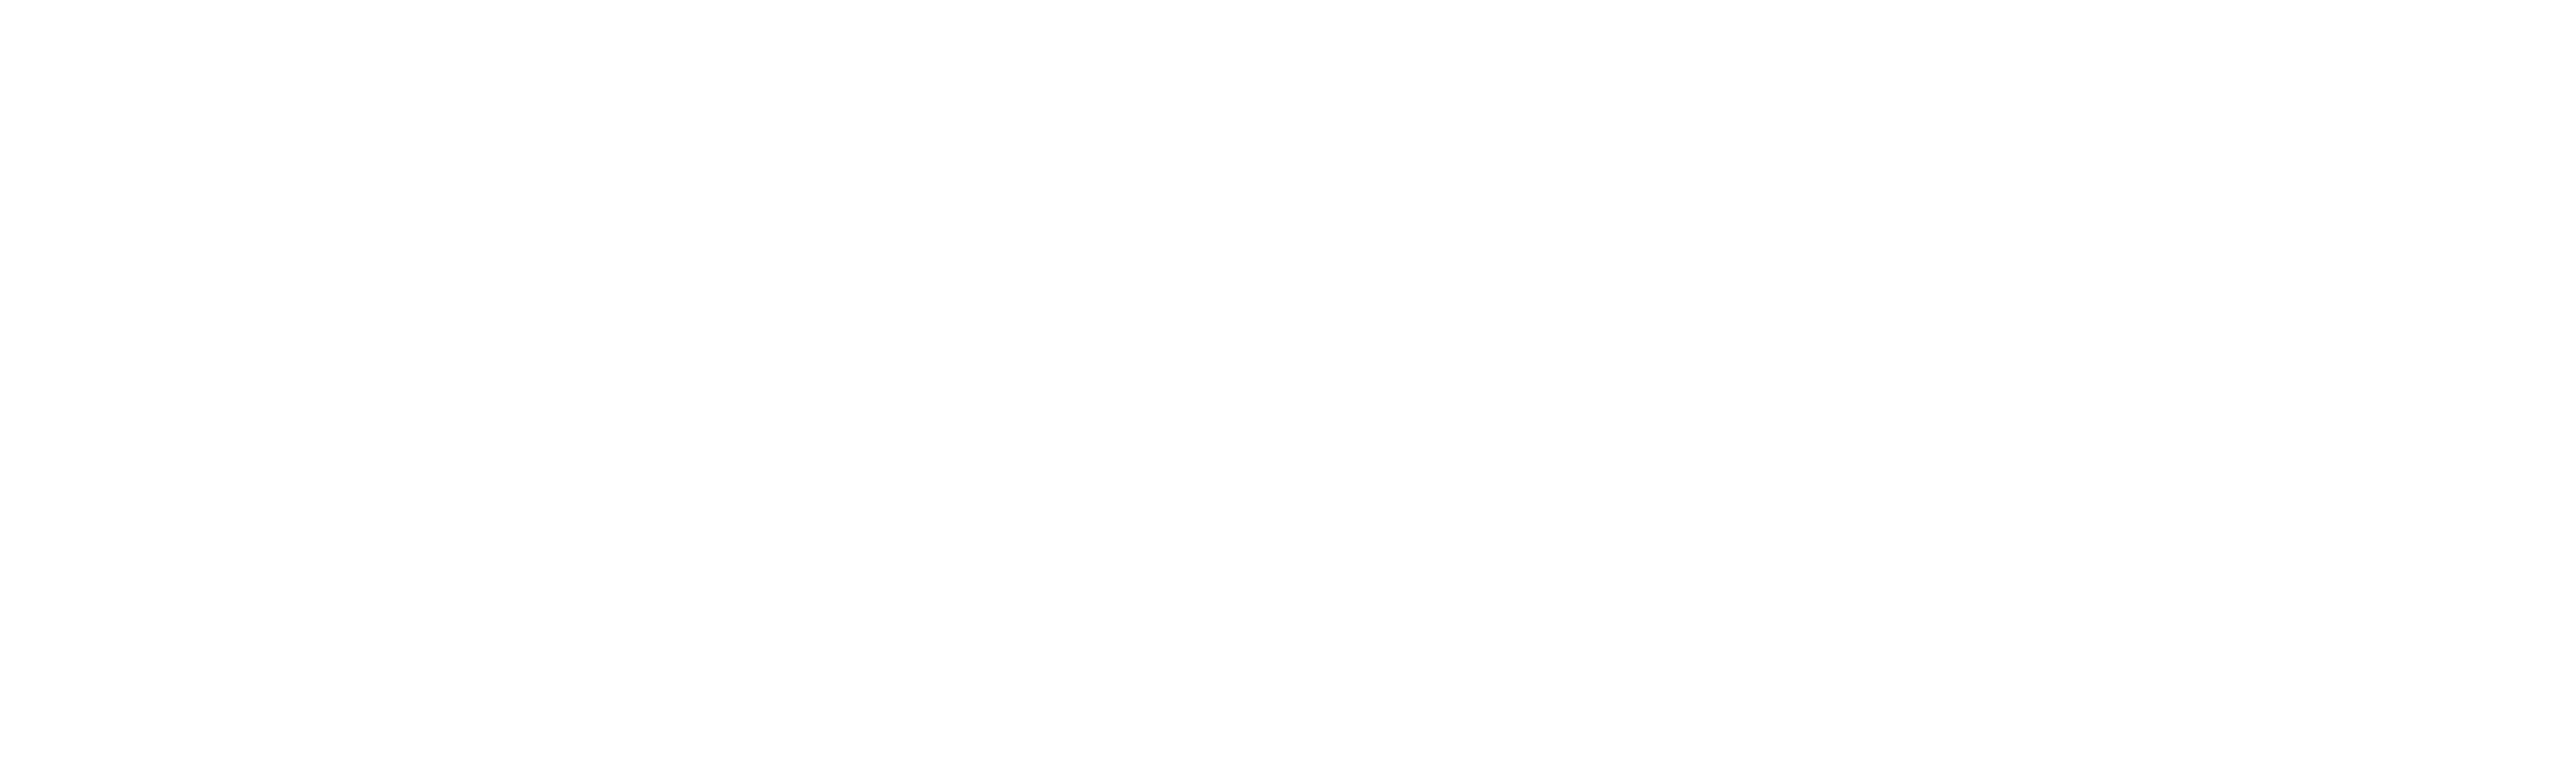 Friends Of Fort Liberte Clinic Logo - MDF Stethoscope